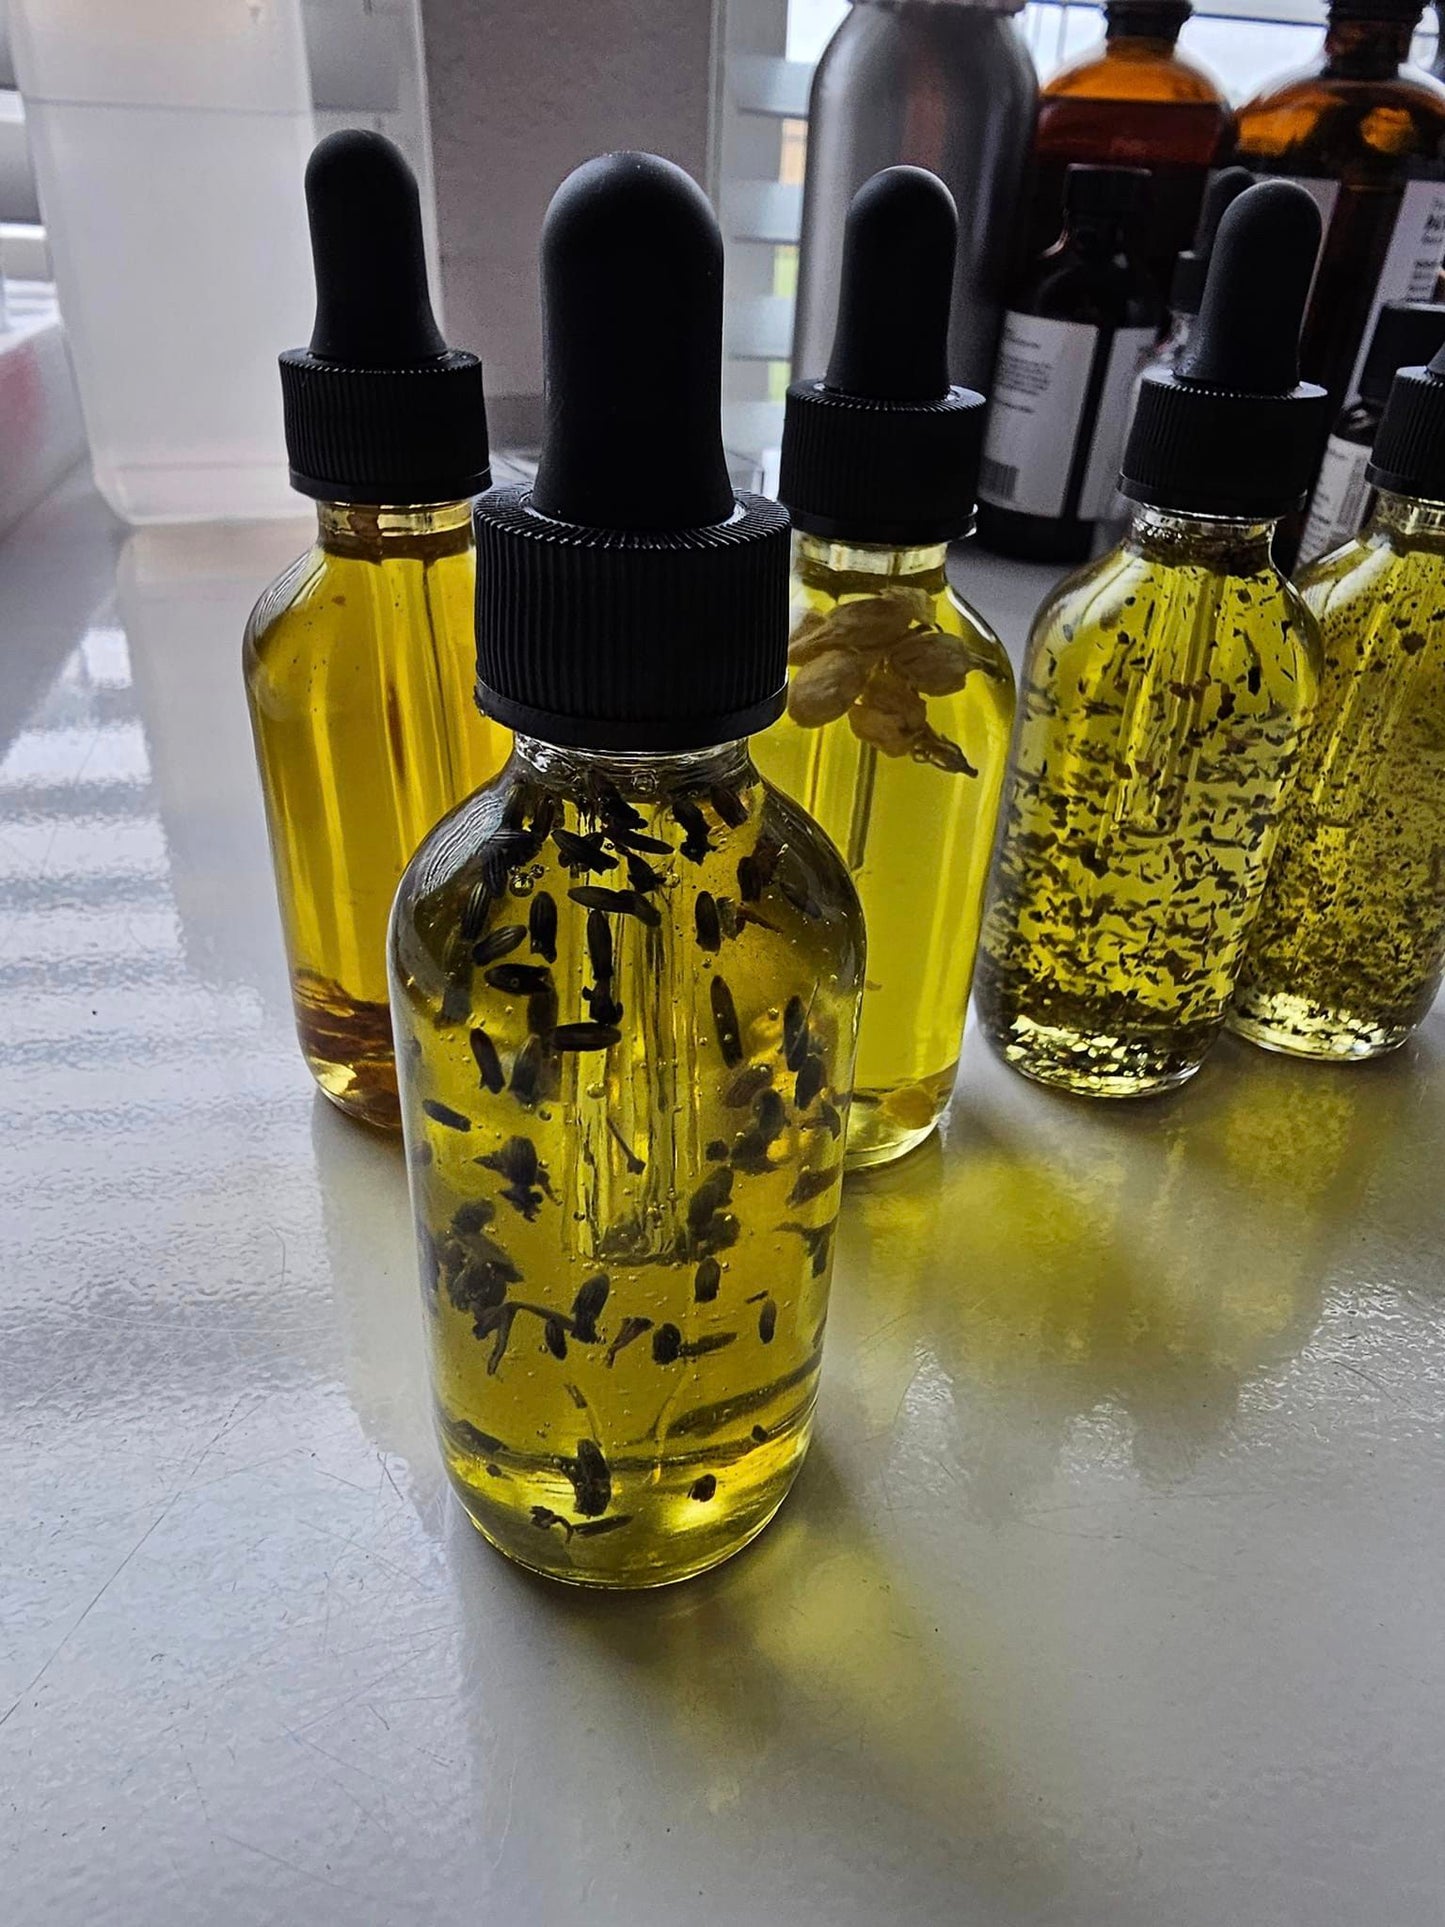 LuxElixir- Body Oil Blend